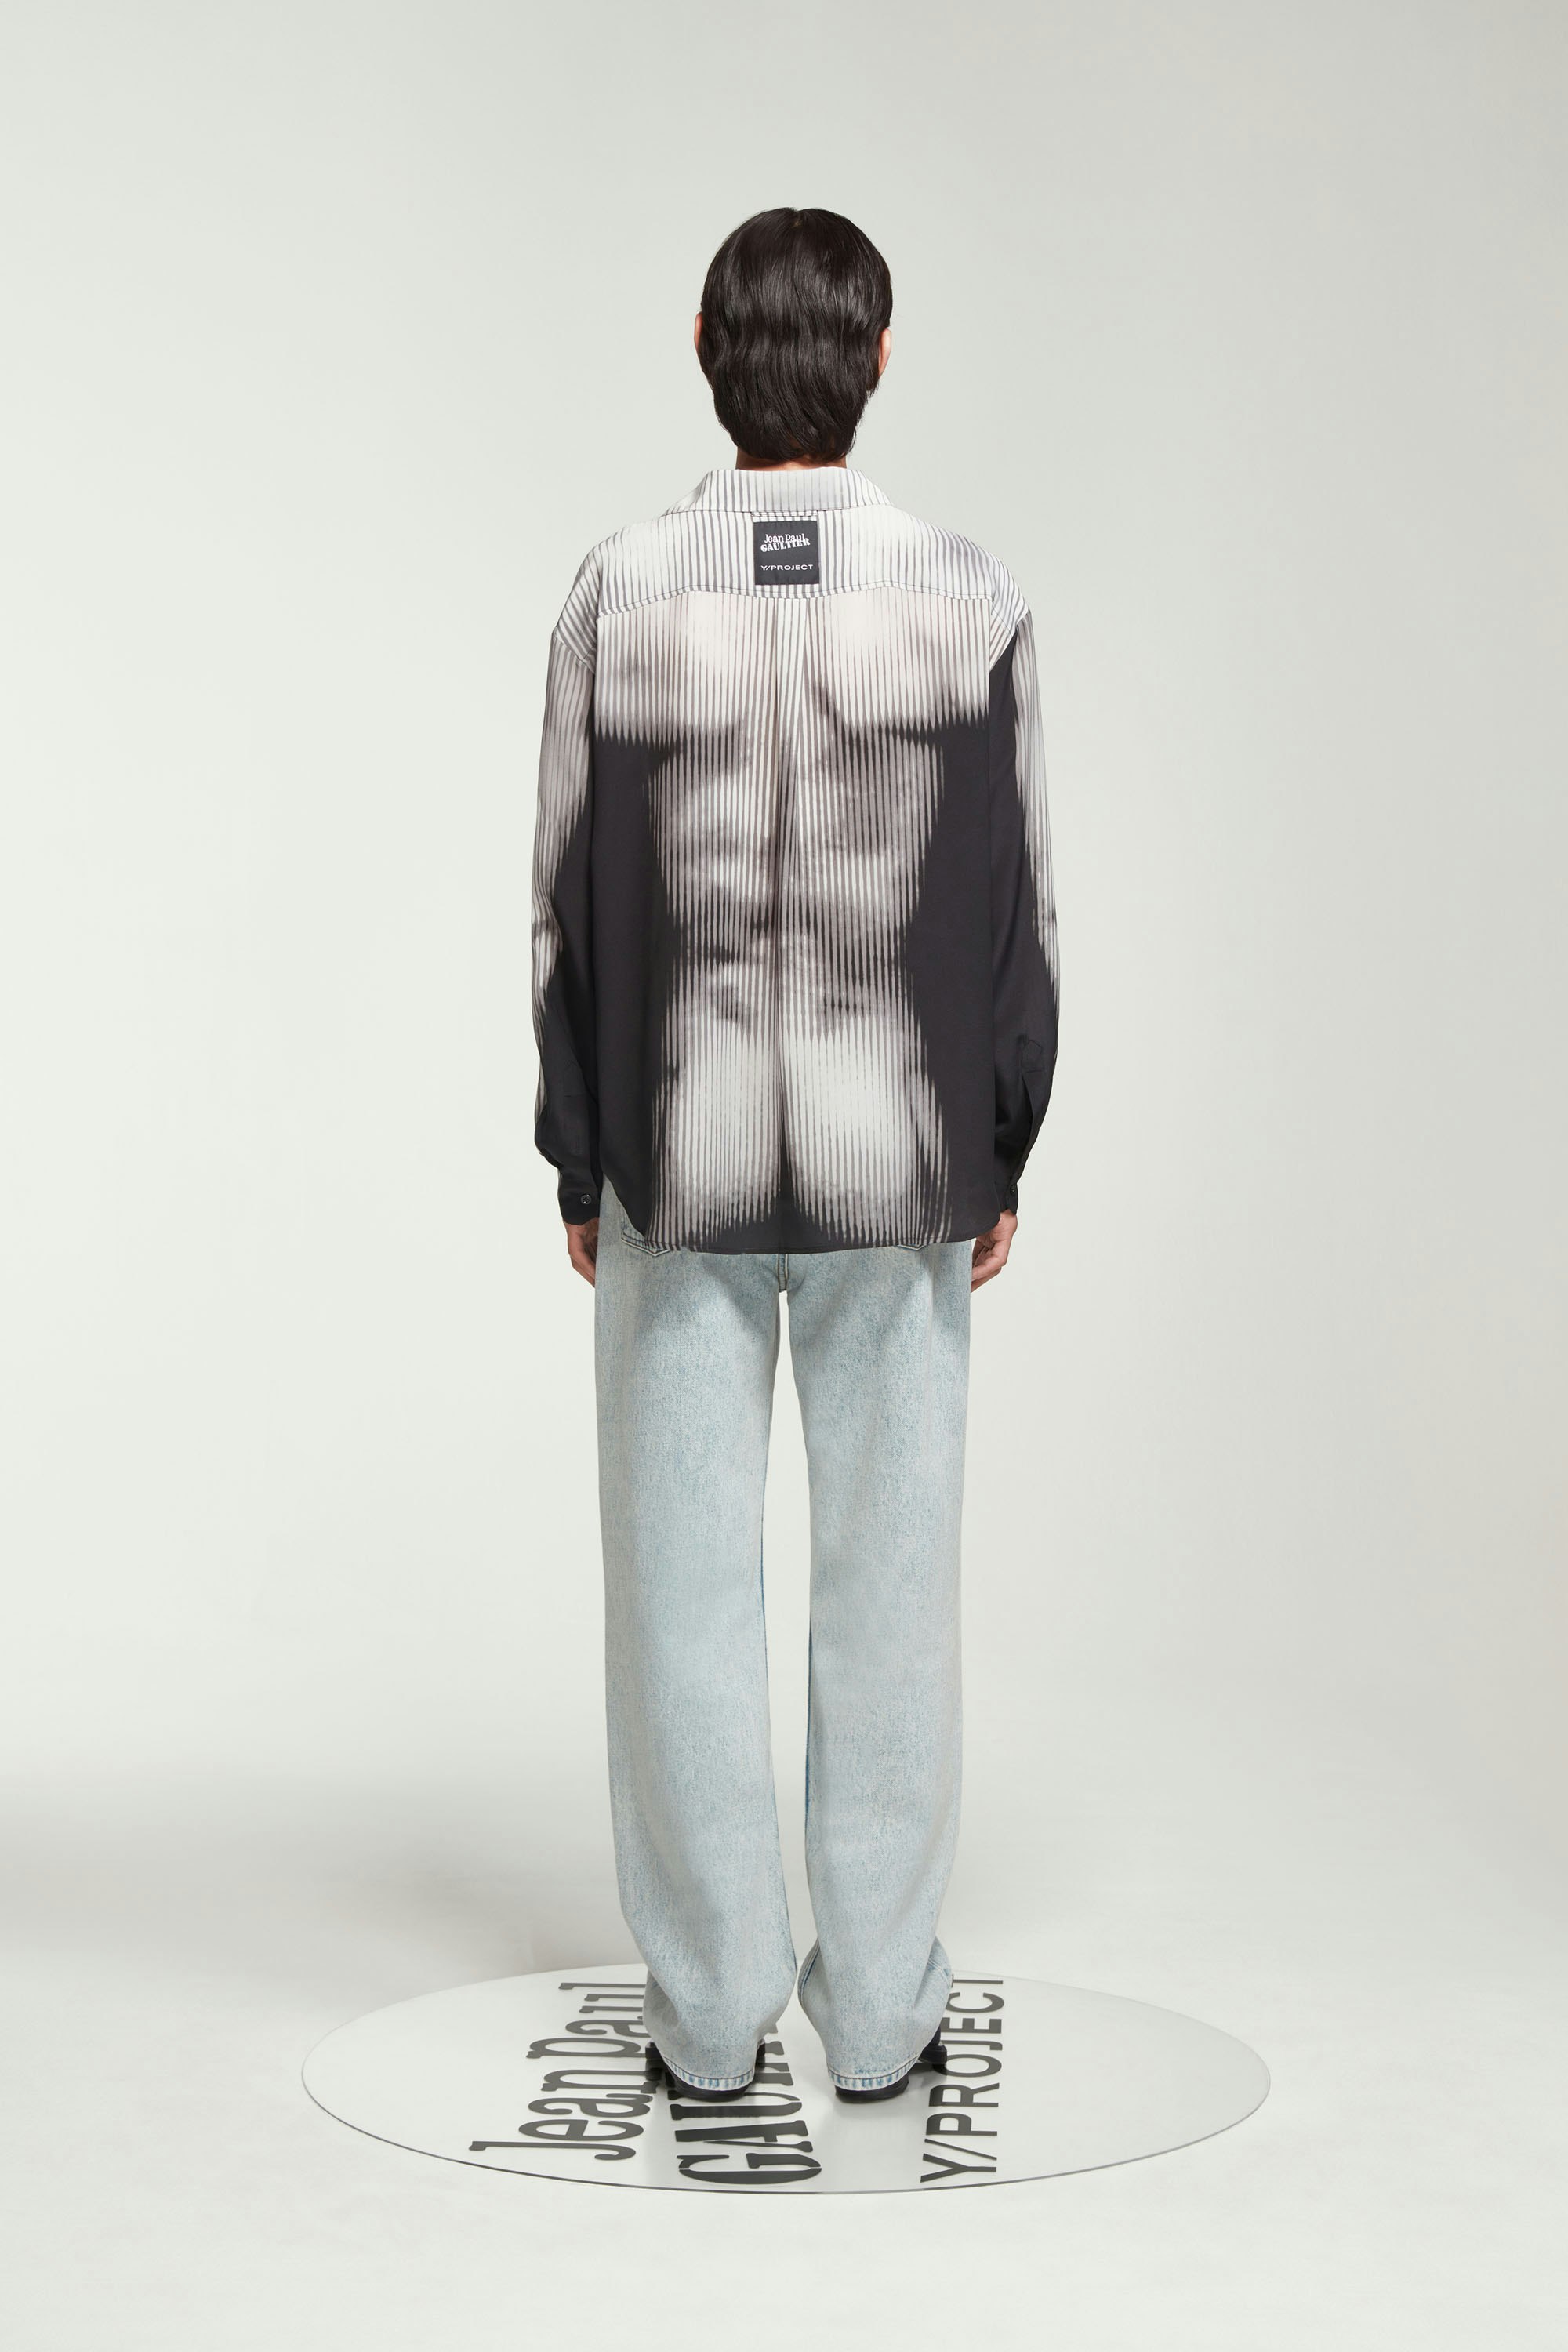 The Black & White Body Morph Pyjama Top by Jean Paul Gaultier x Y/Project